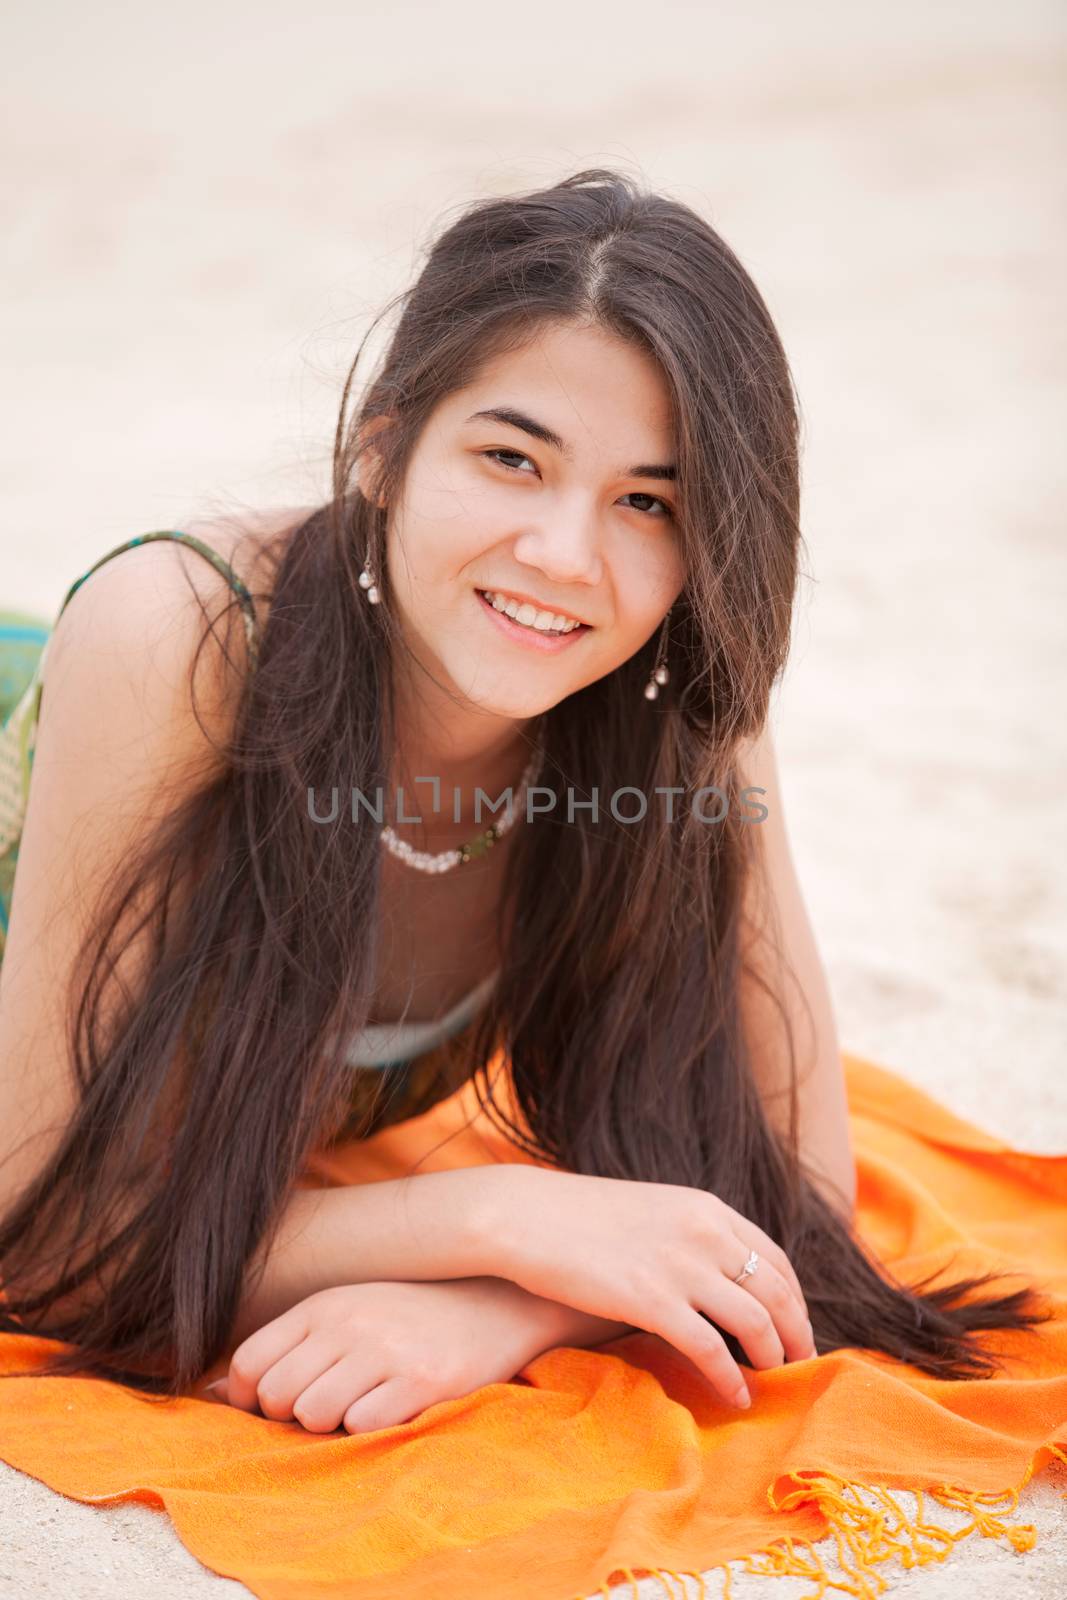 Biracial yeen girl lying on orange blanket at beach by jarenwicklund